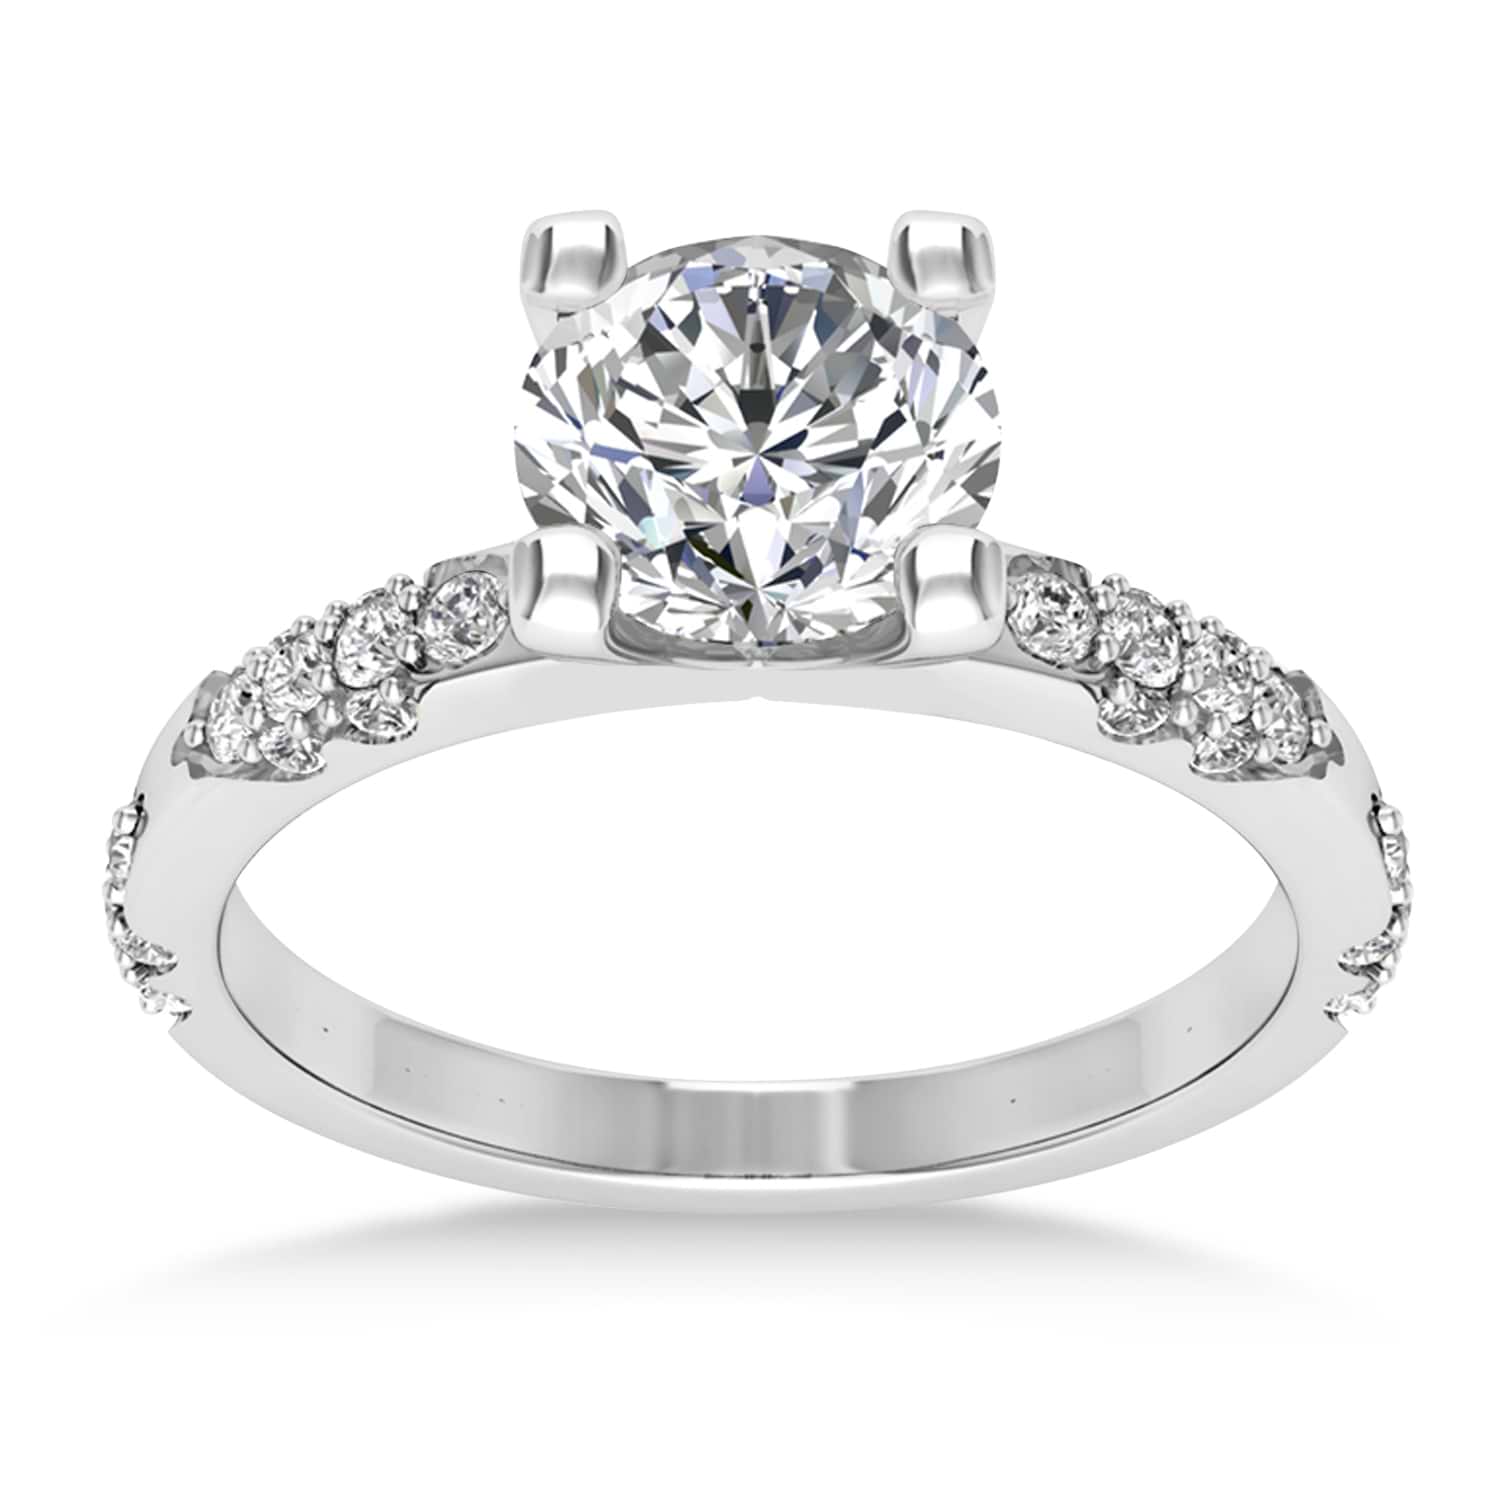 Diamond Prong Engagement Ring Palladium (0.32ct)